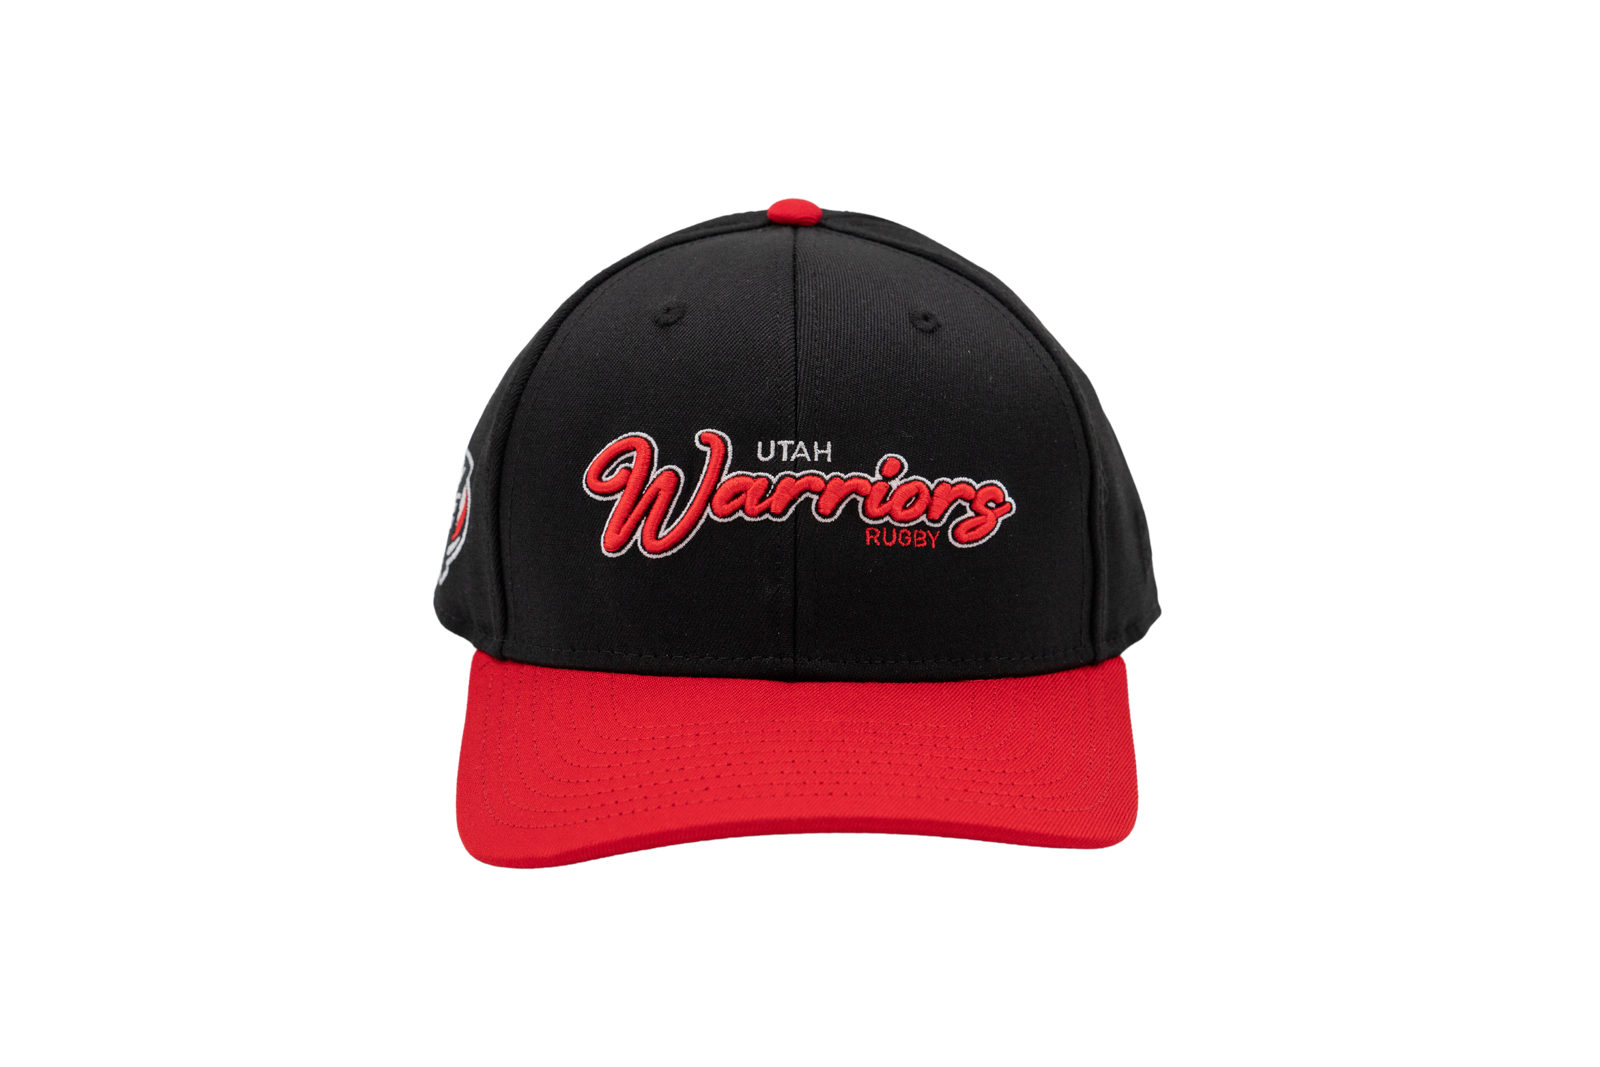 Warriors Cursive Hat - Utah Warriors Rugby